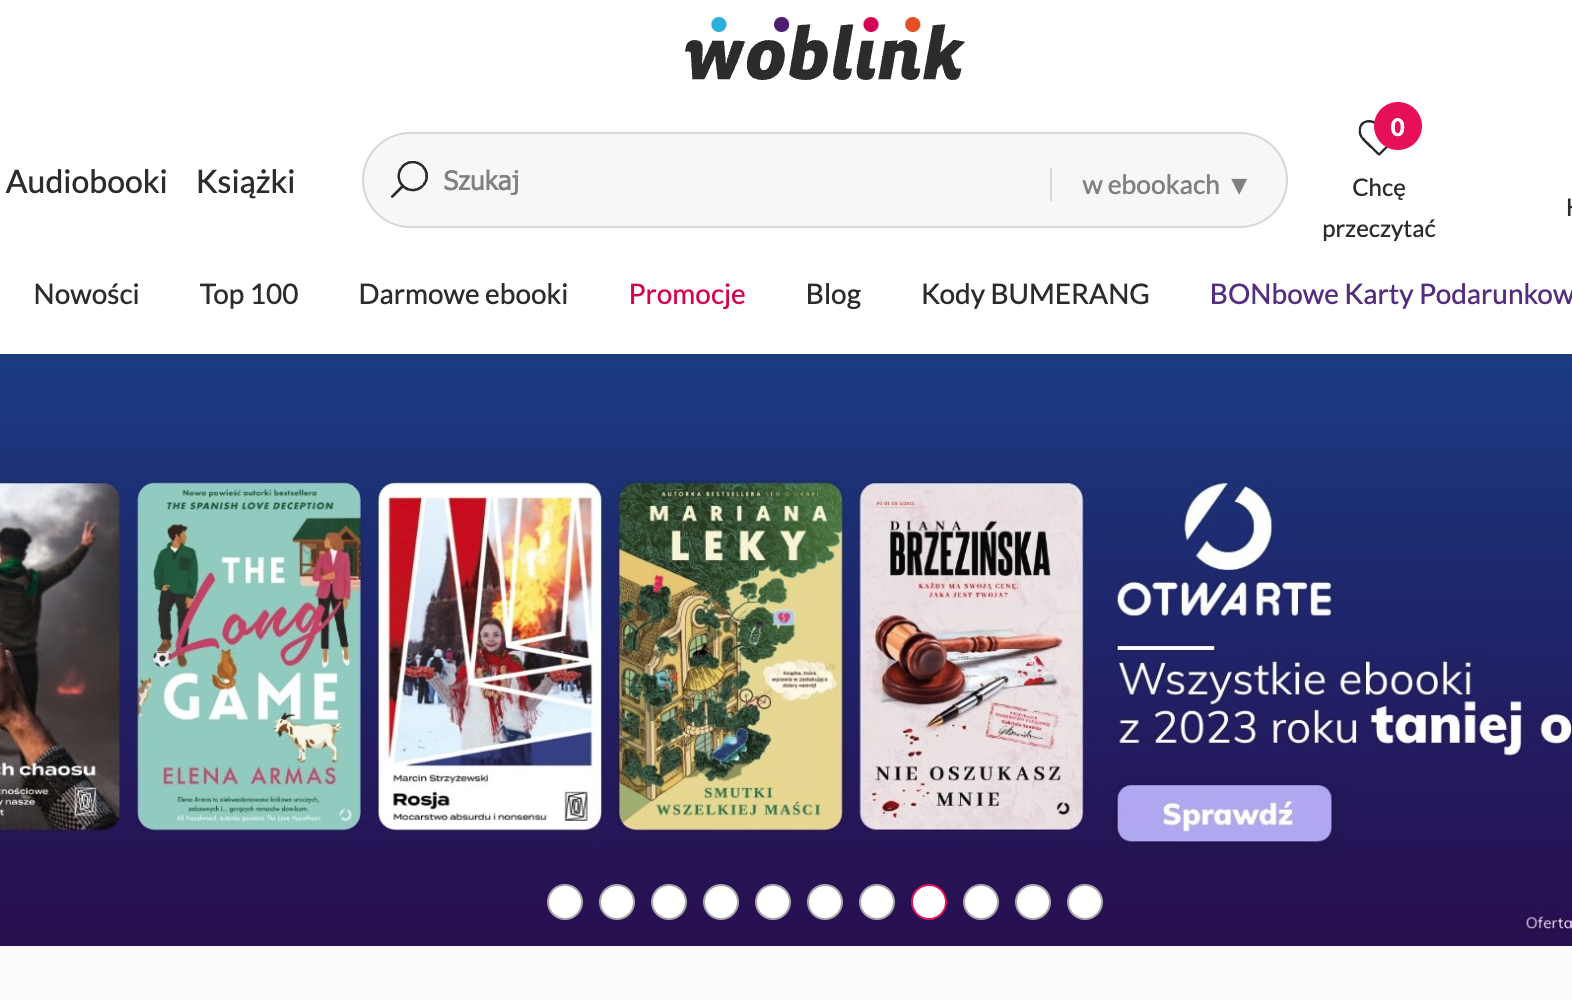 woblink.com: widok sklepu internetowego